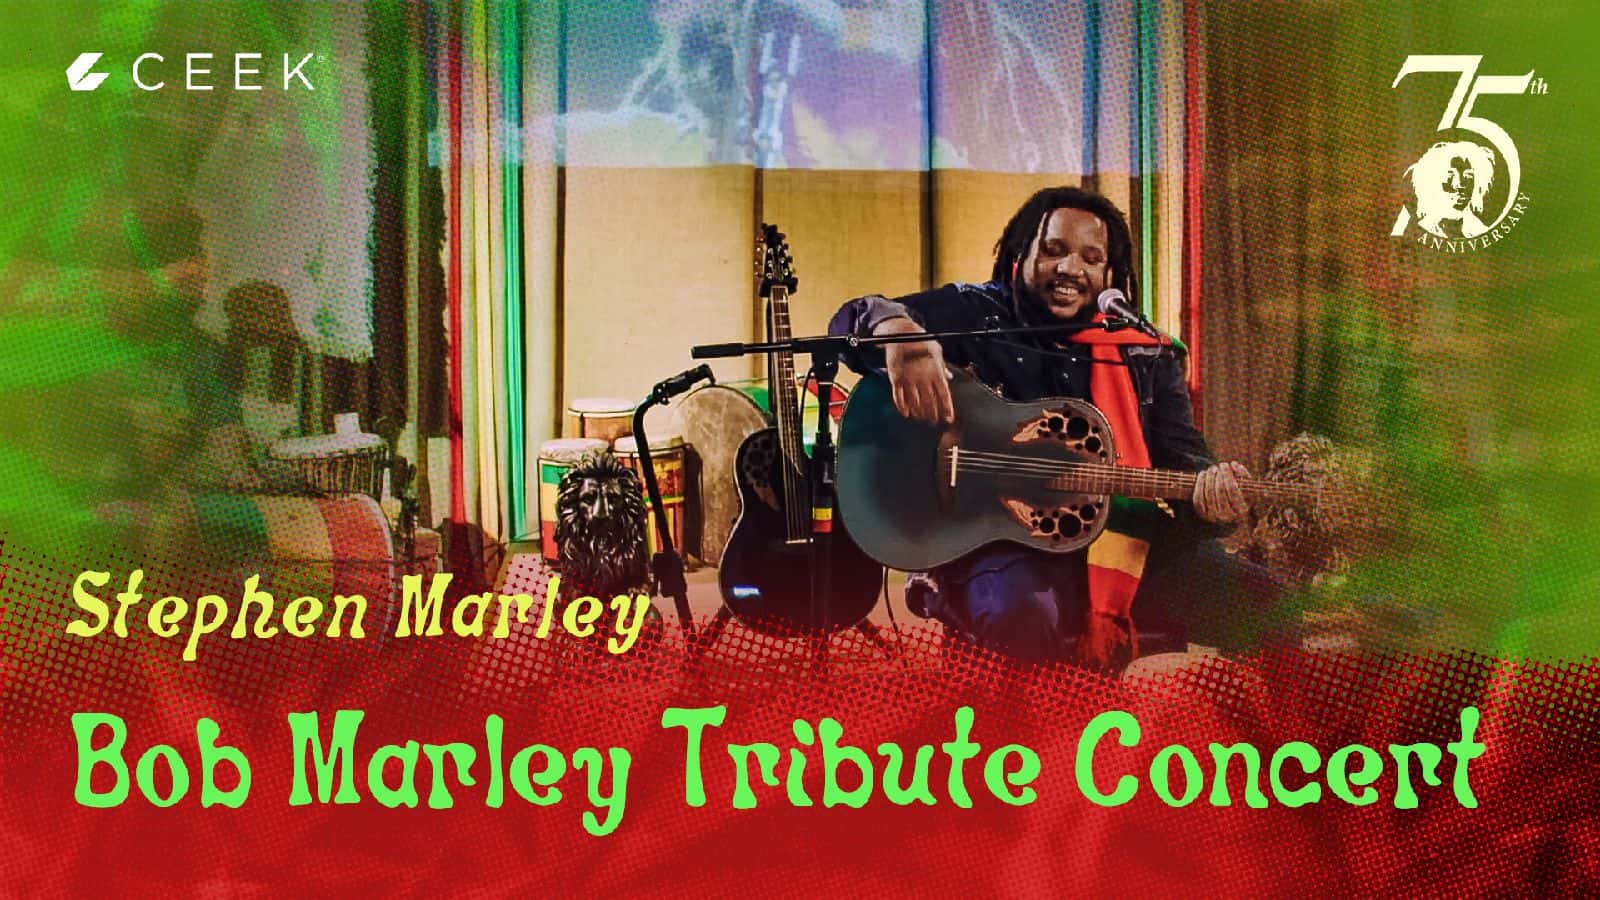 Bob Marley 75th Anniversary Tribute Concert ceek.com